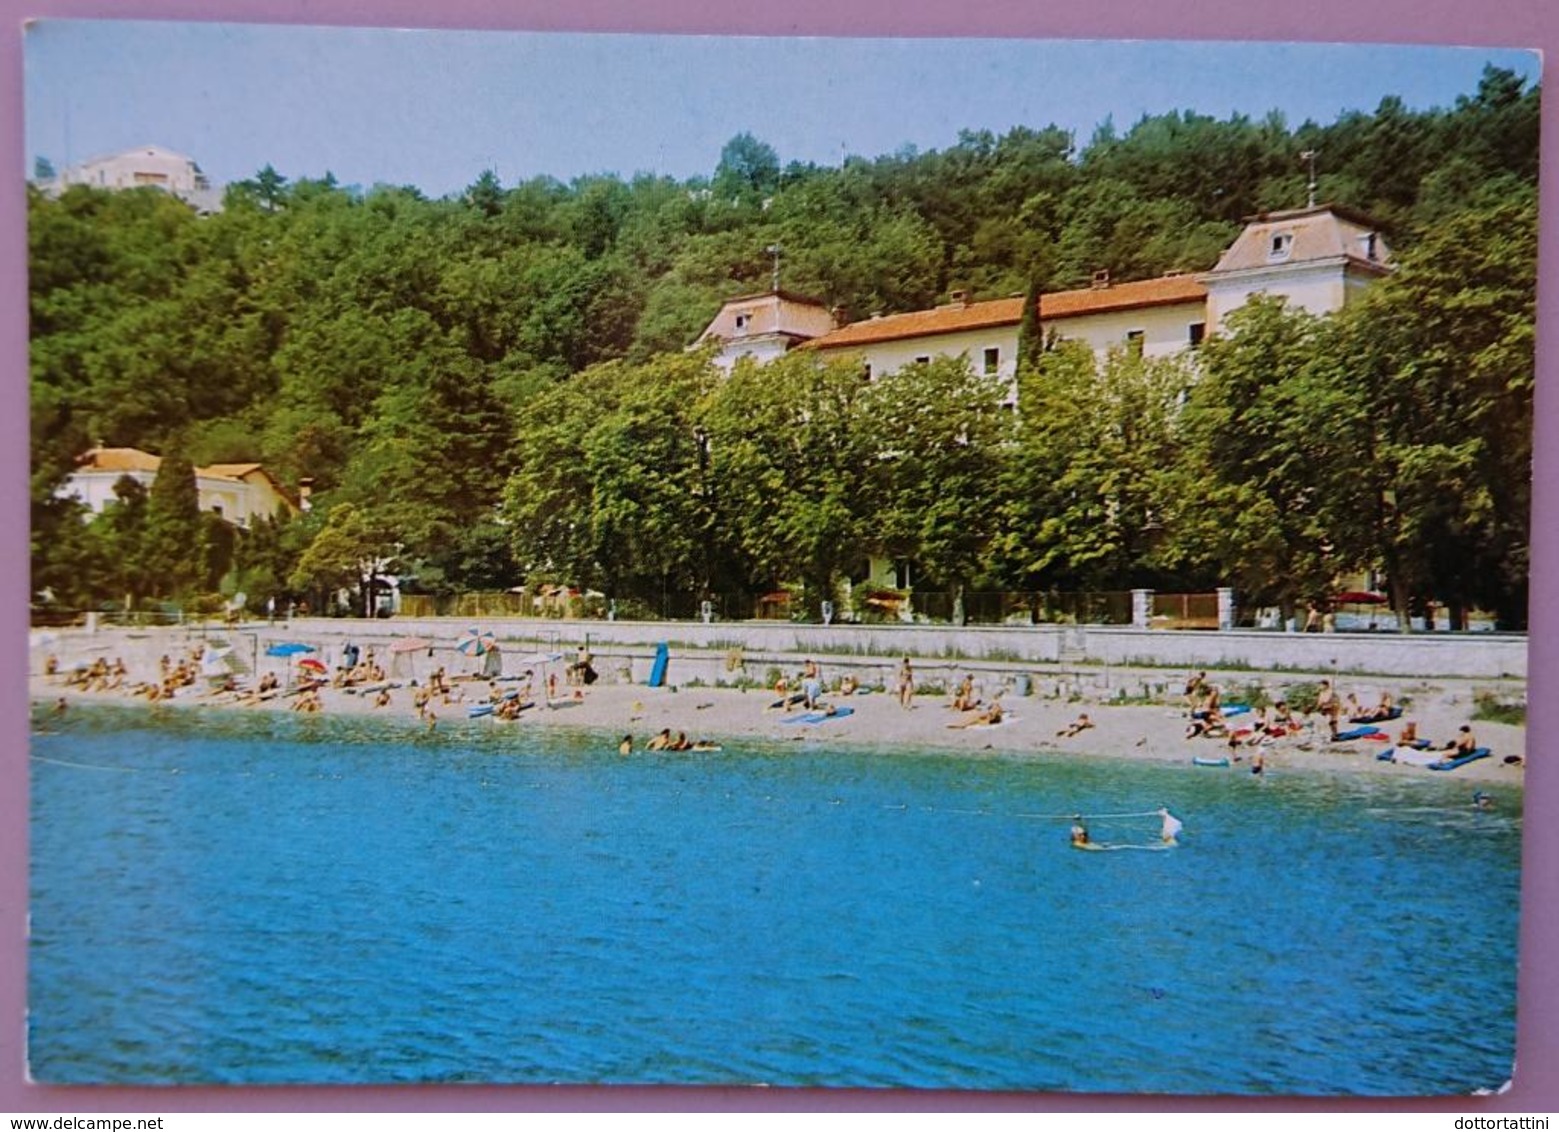 SISTIANA A MARE - Spiaggia - Nv - Trieste